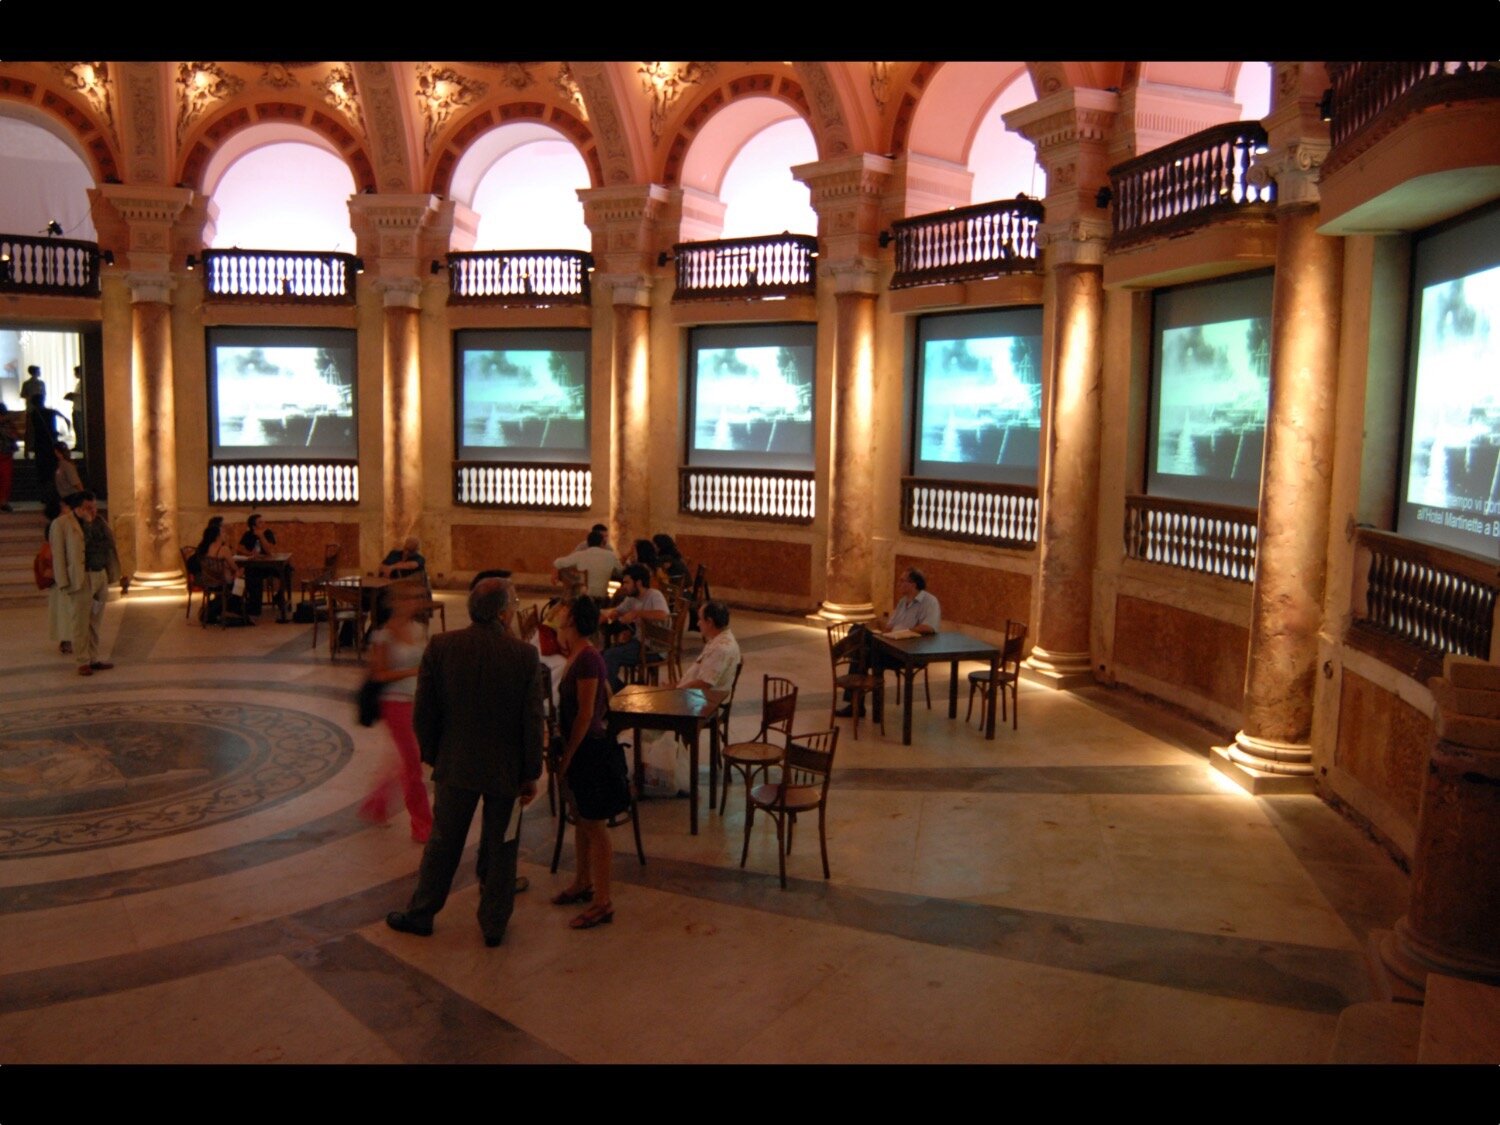  Cinema: Atlas of the Imagination
Salone Margherita, Galleria Umberto I,Naples, 2006  
(photo courtesy of Telecom Italia) 